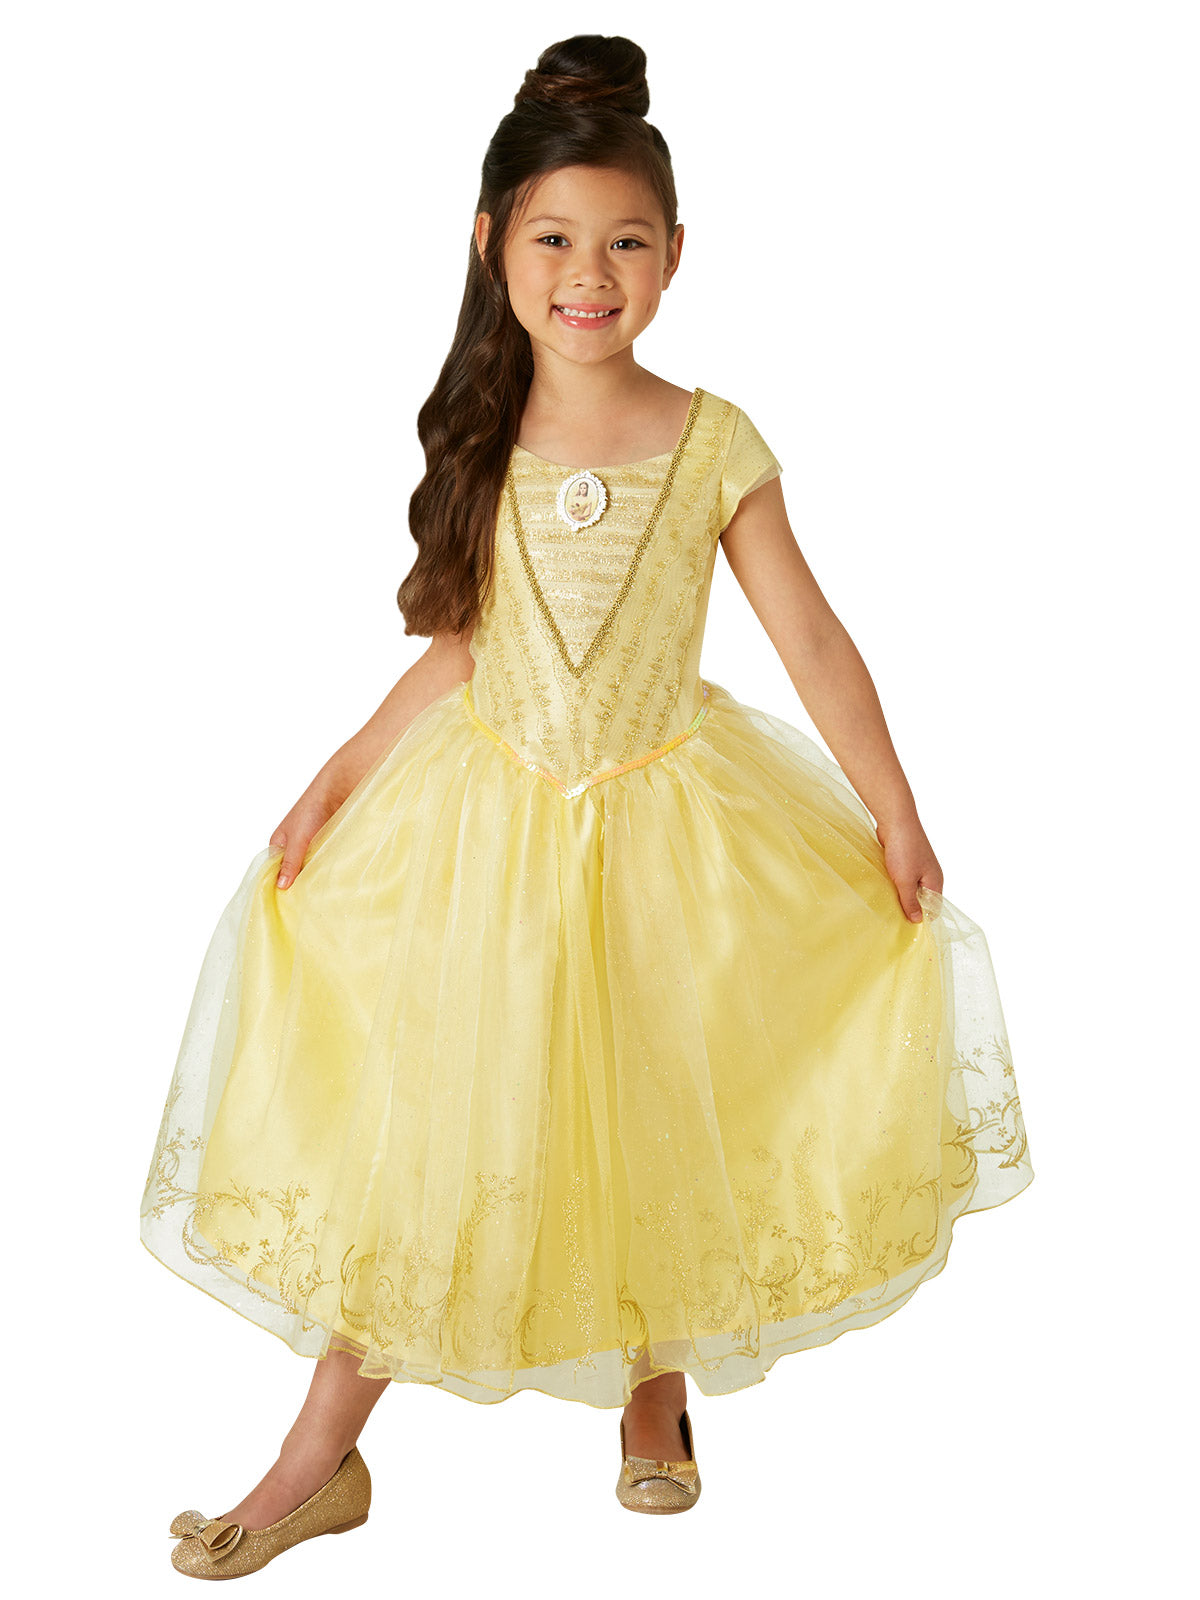 Belle Live Action Girls Deluxe Child Costume, Genuine Disney Licensed